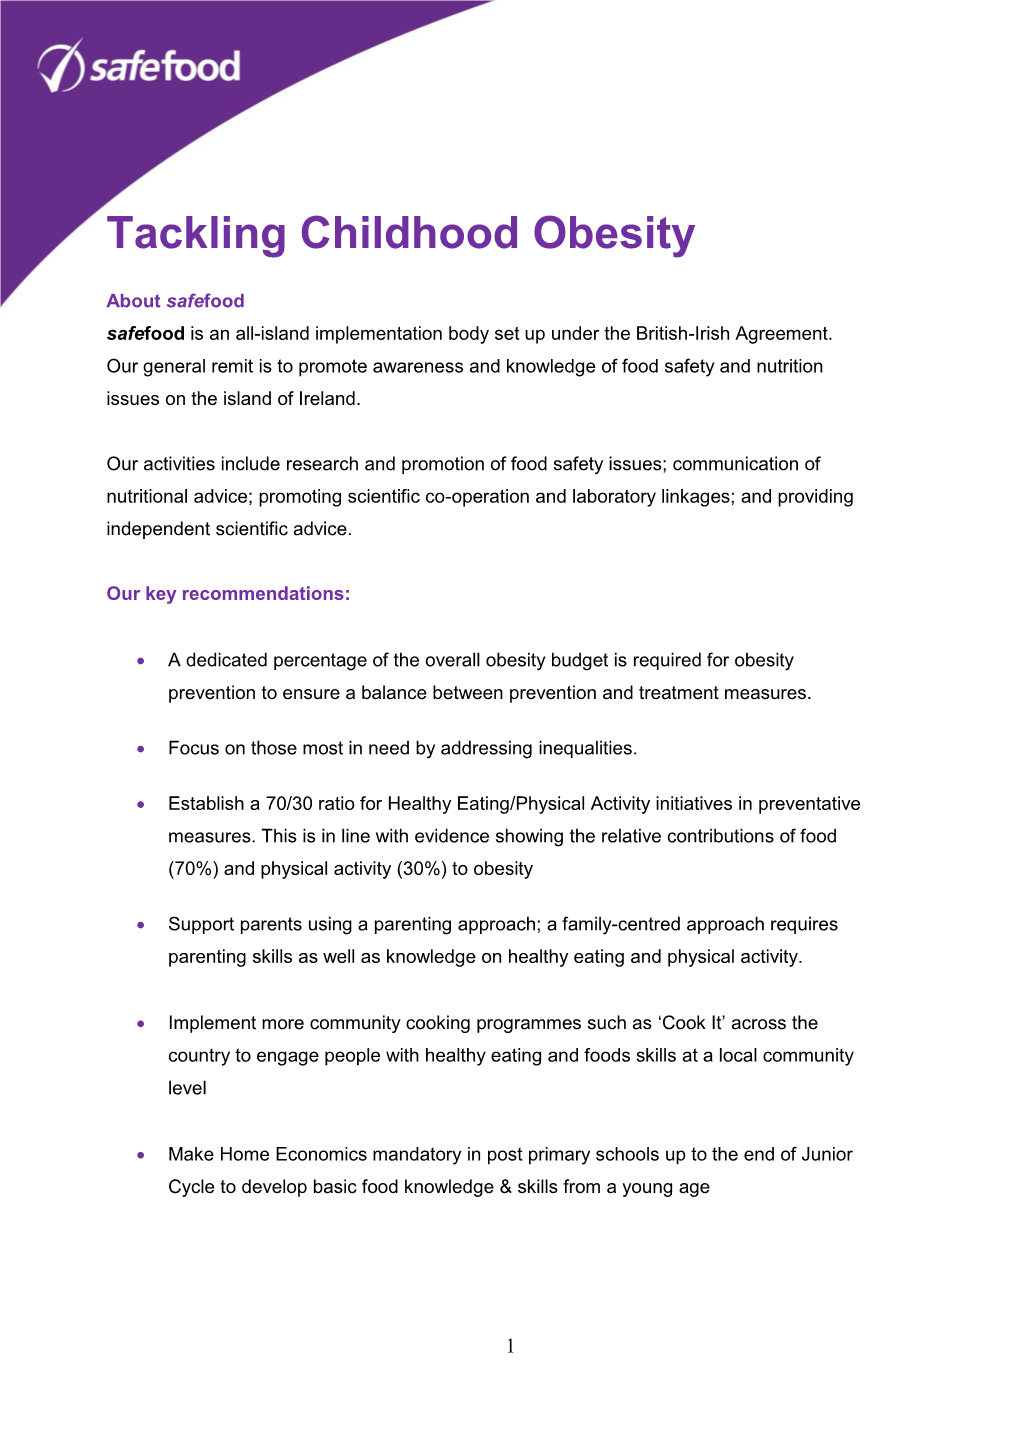 Tackling Childhood Obesity